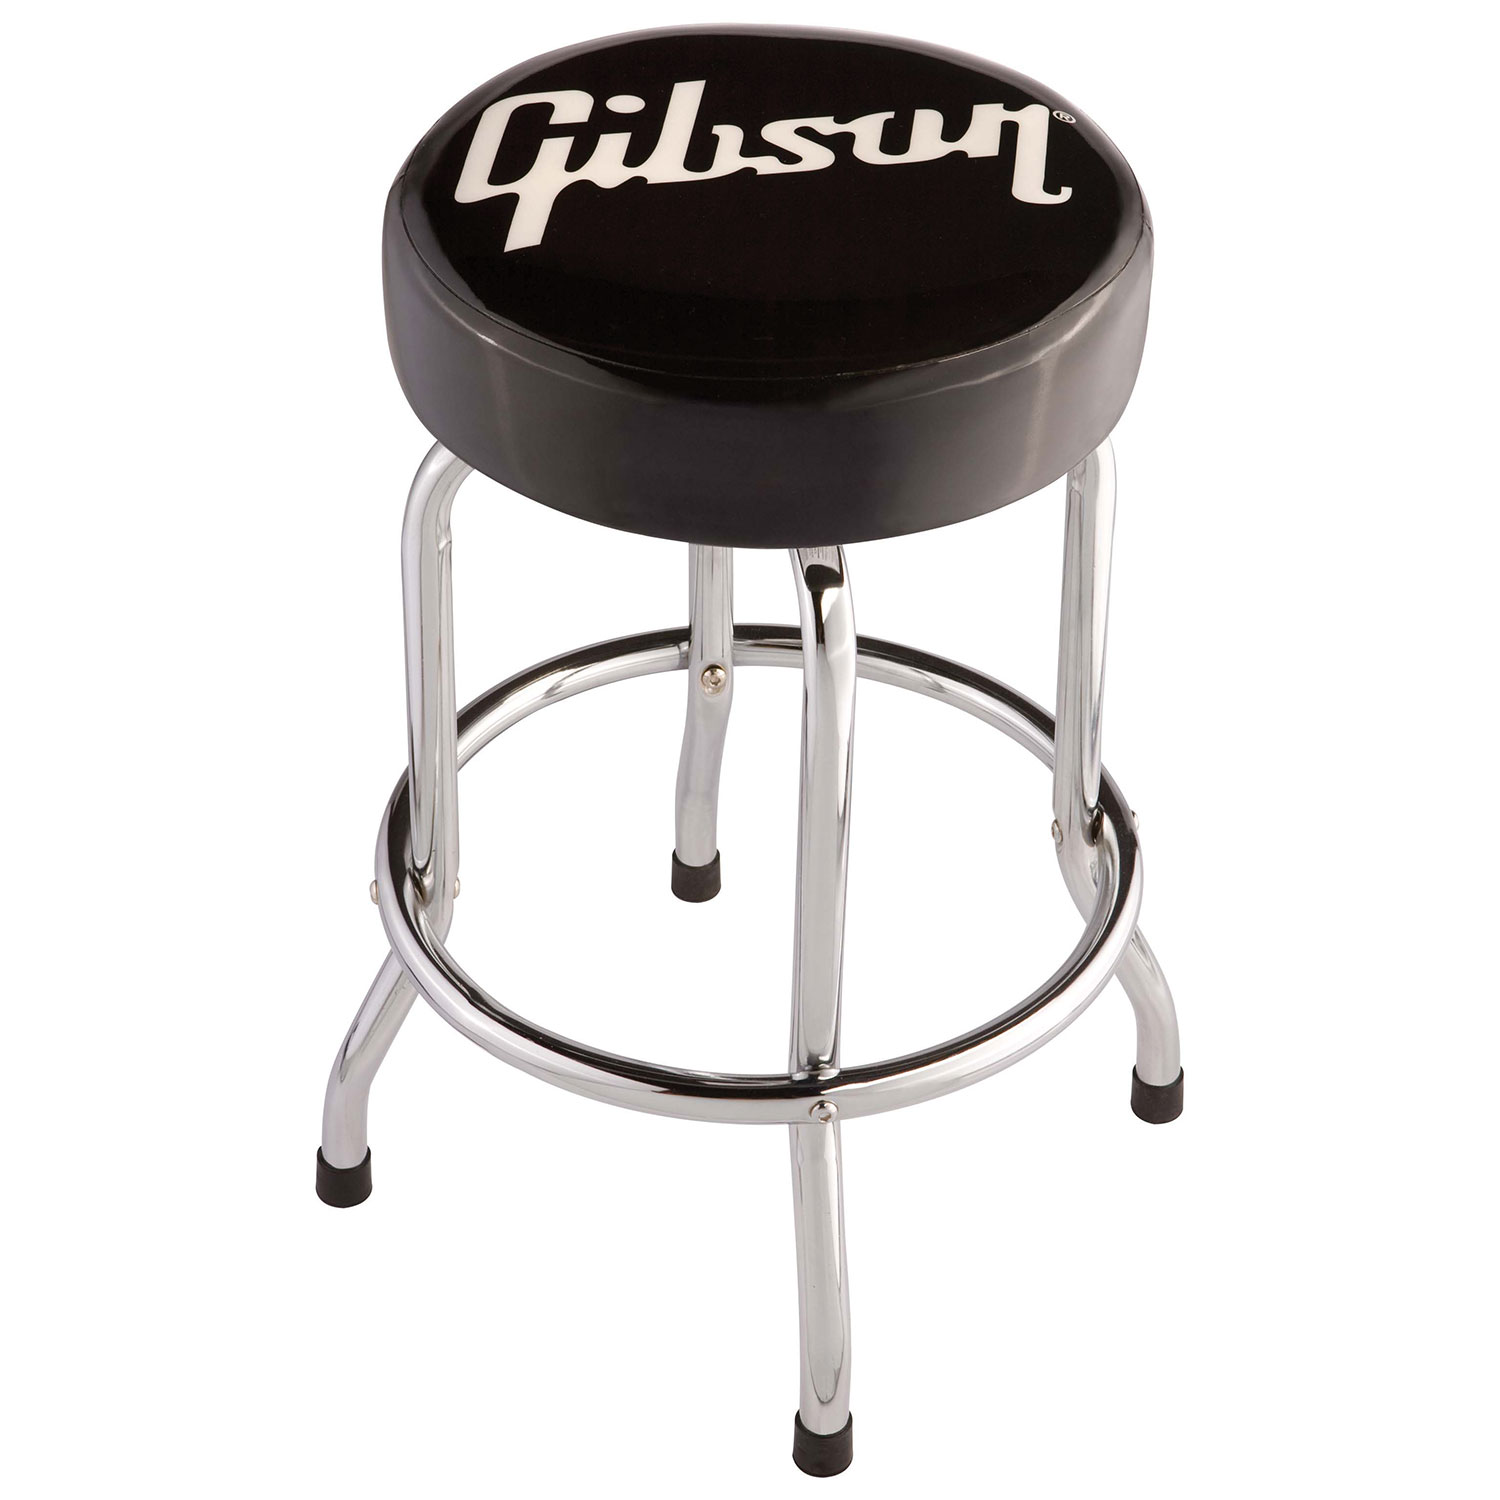 gibson-stool